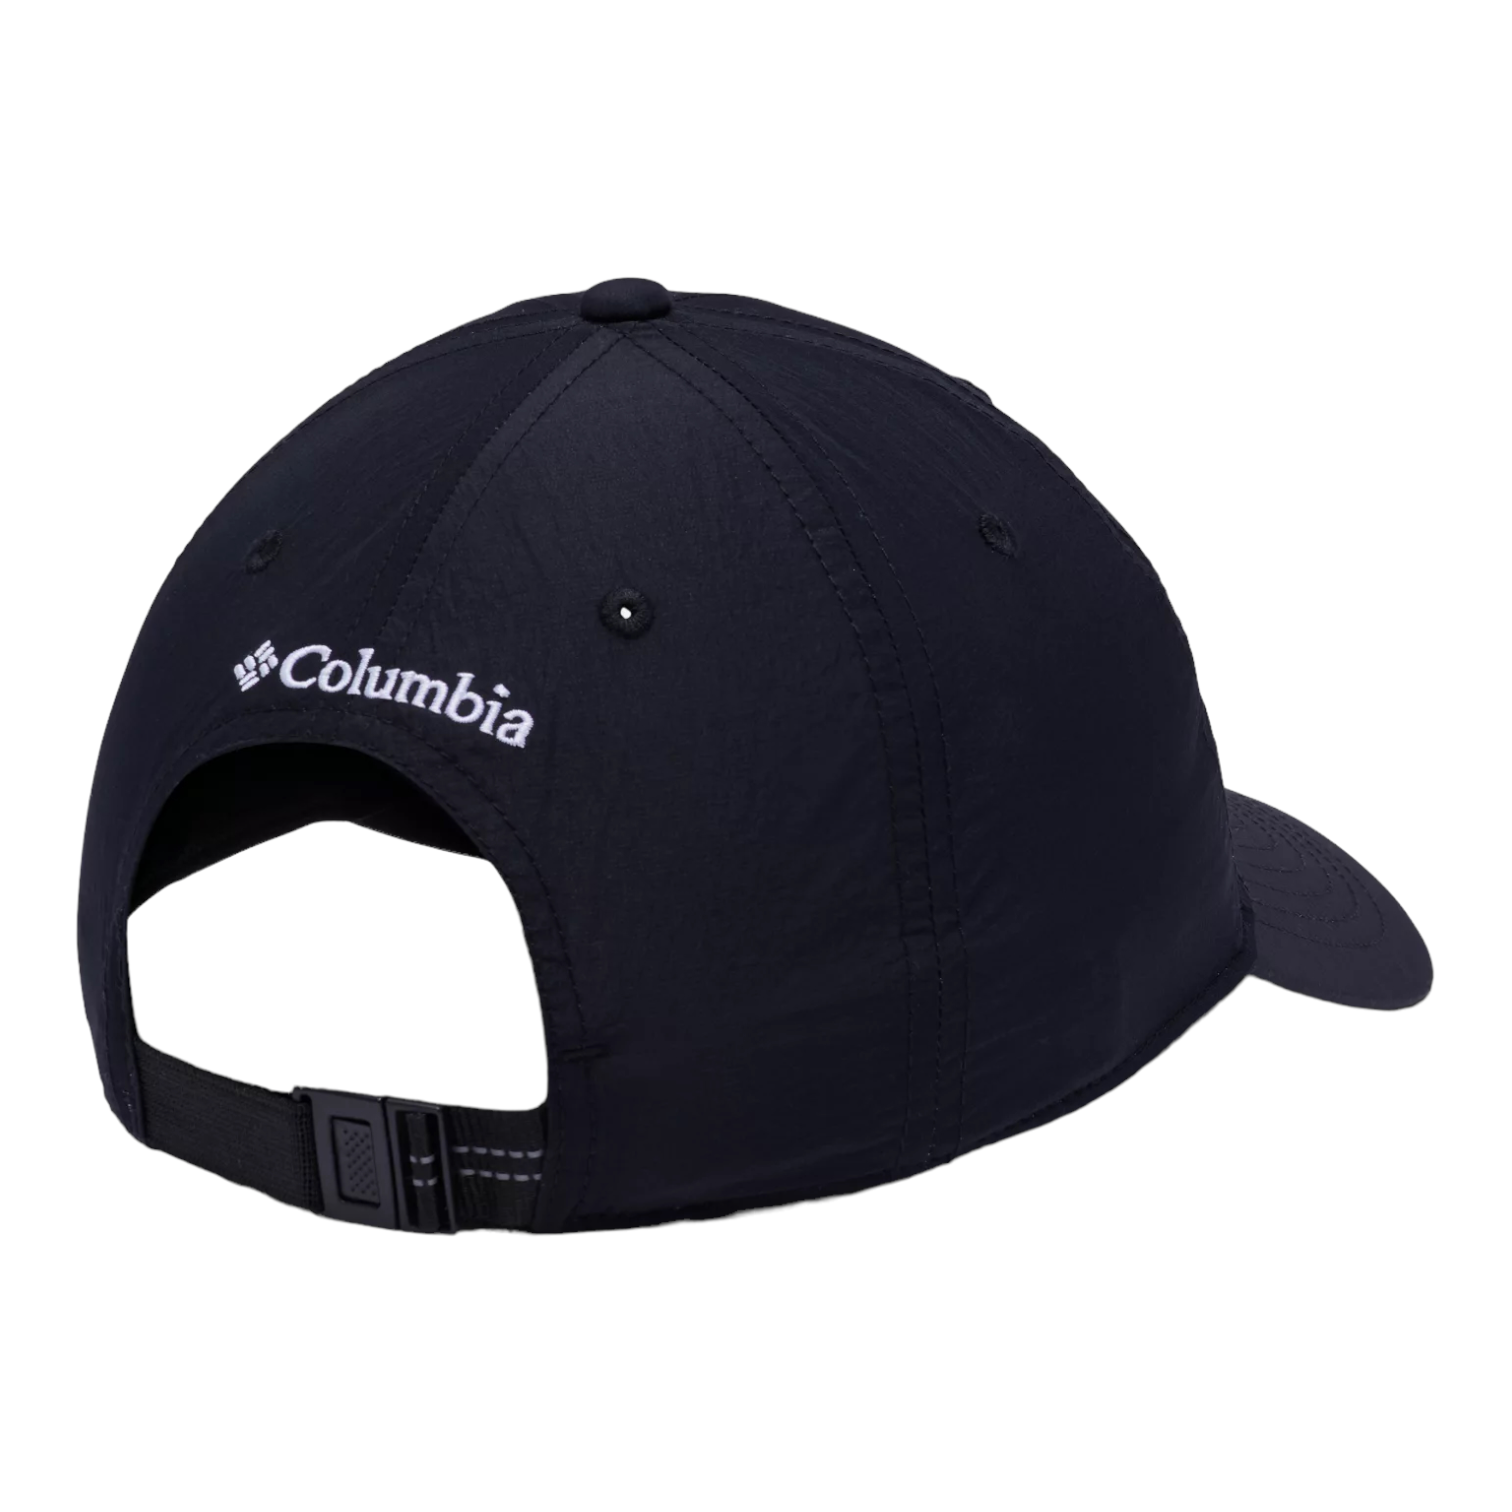 Columbia Spring Canyon Ball Cap - Black/Boundless